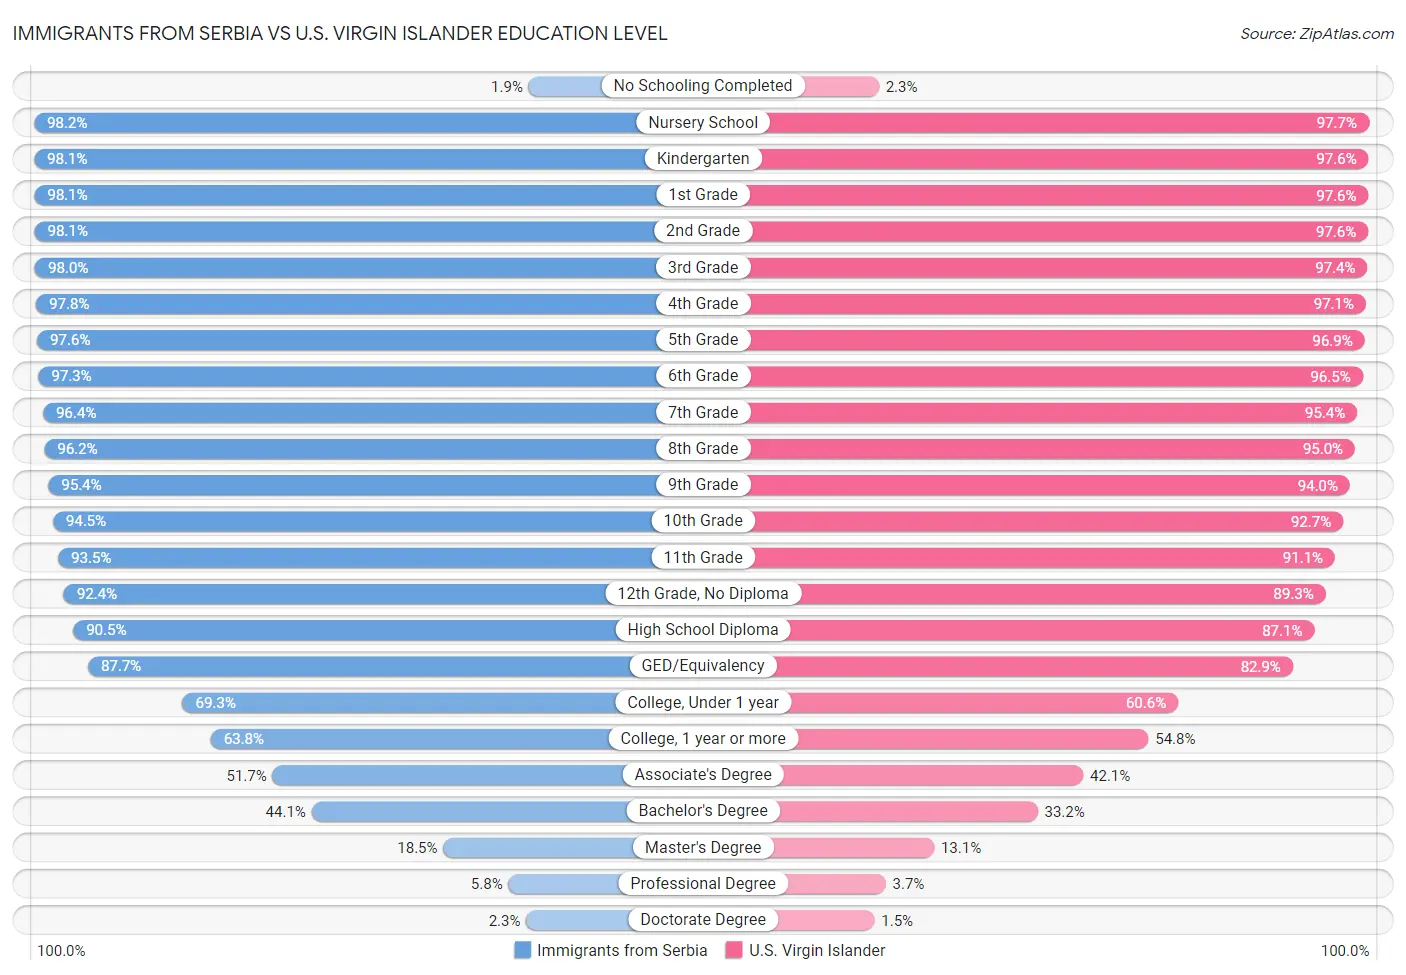 Immigrants from Serbia vs U.S. Virgin Islander Education Level